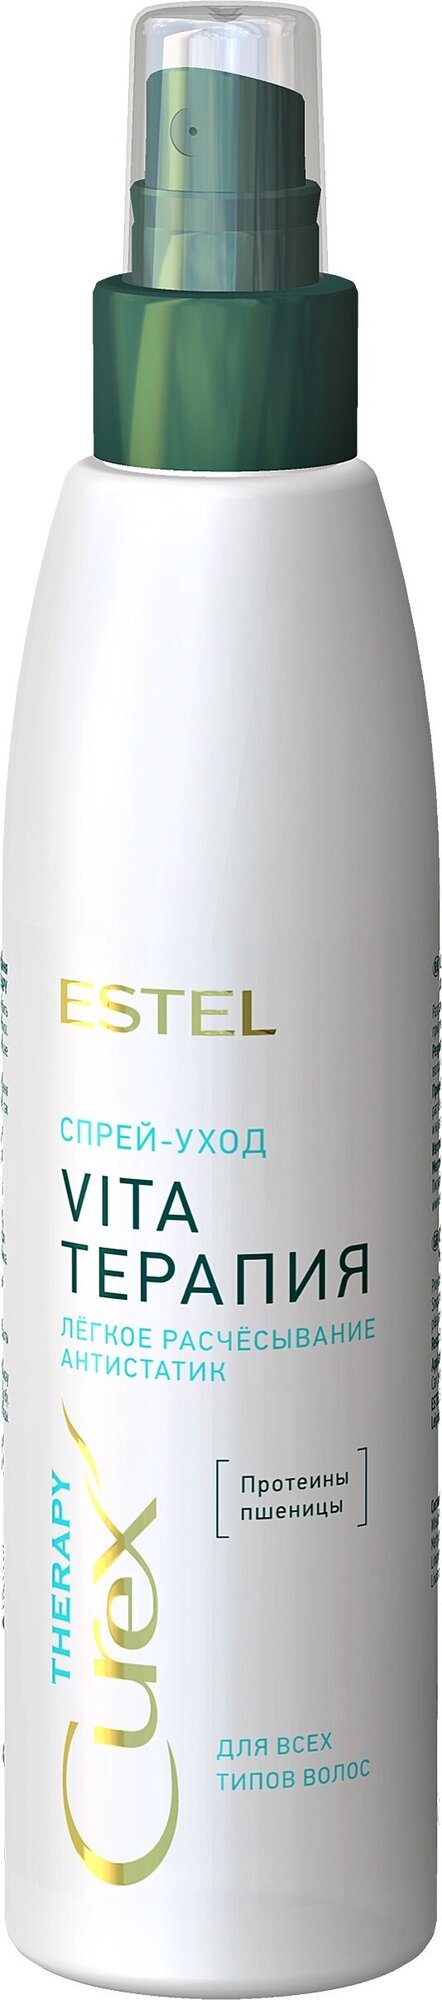 Спрей-уход для волос Vita-терапия ESTEL CUREX THERAPY 200 мл